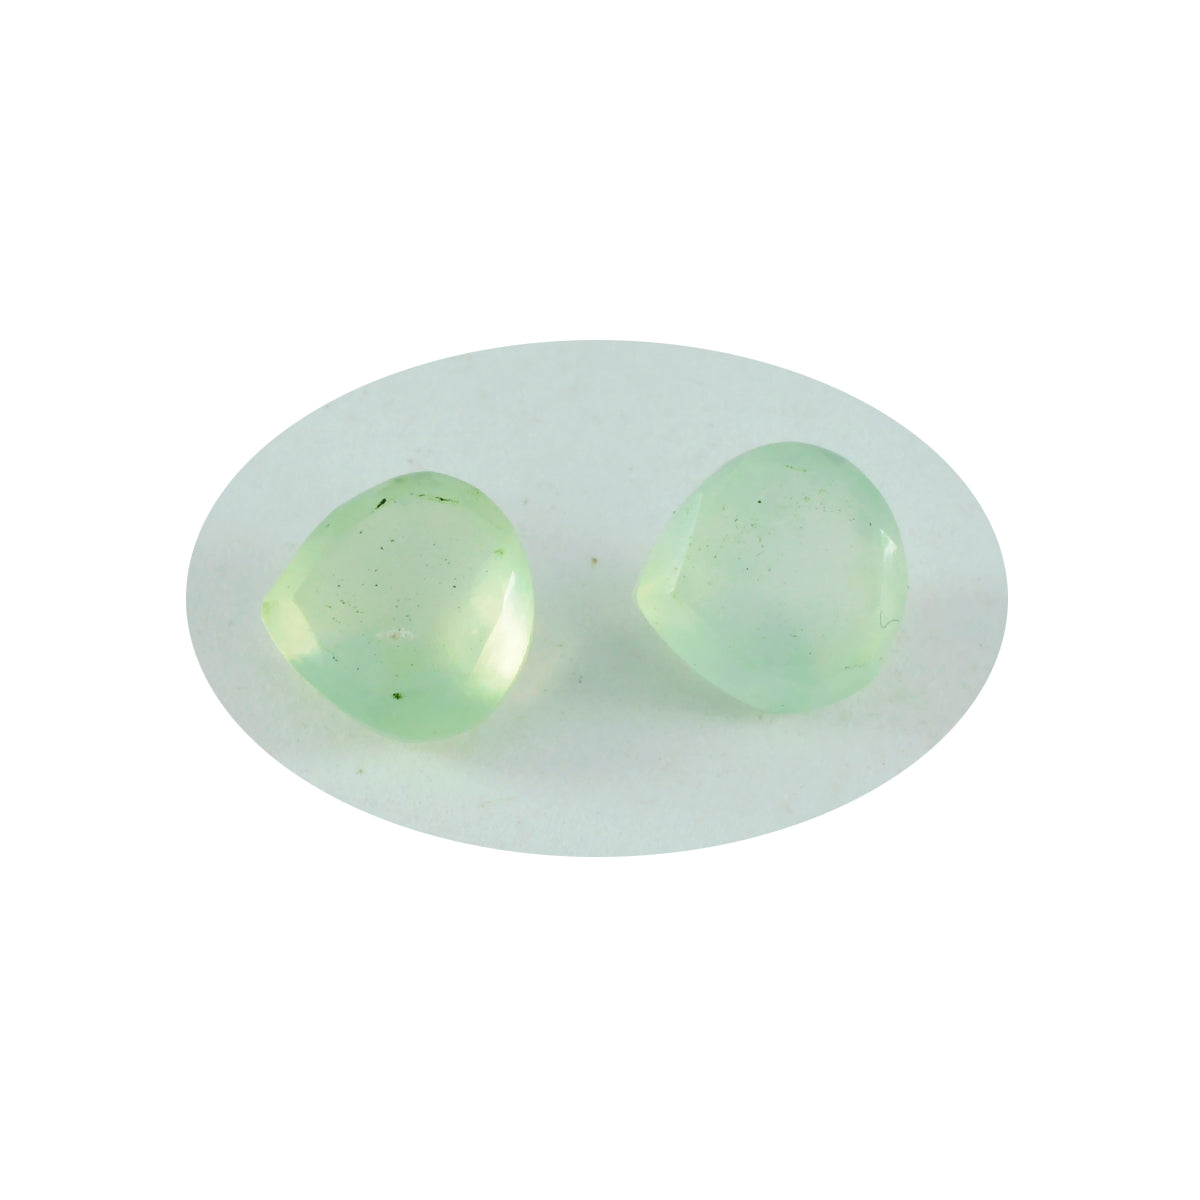 Riyogems 1PC Green Prehnite Faceted 5x5 mm Heart Shape superb Quality Loose Gems